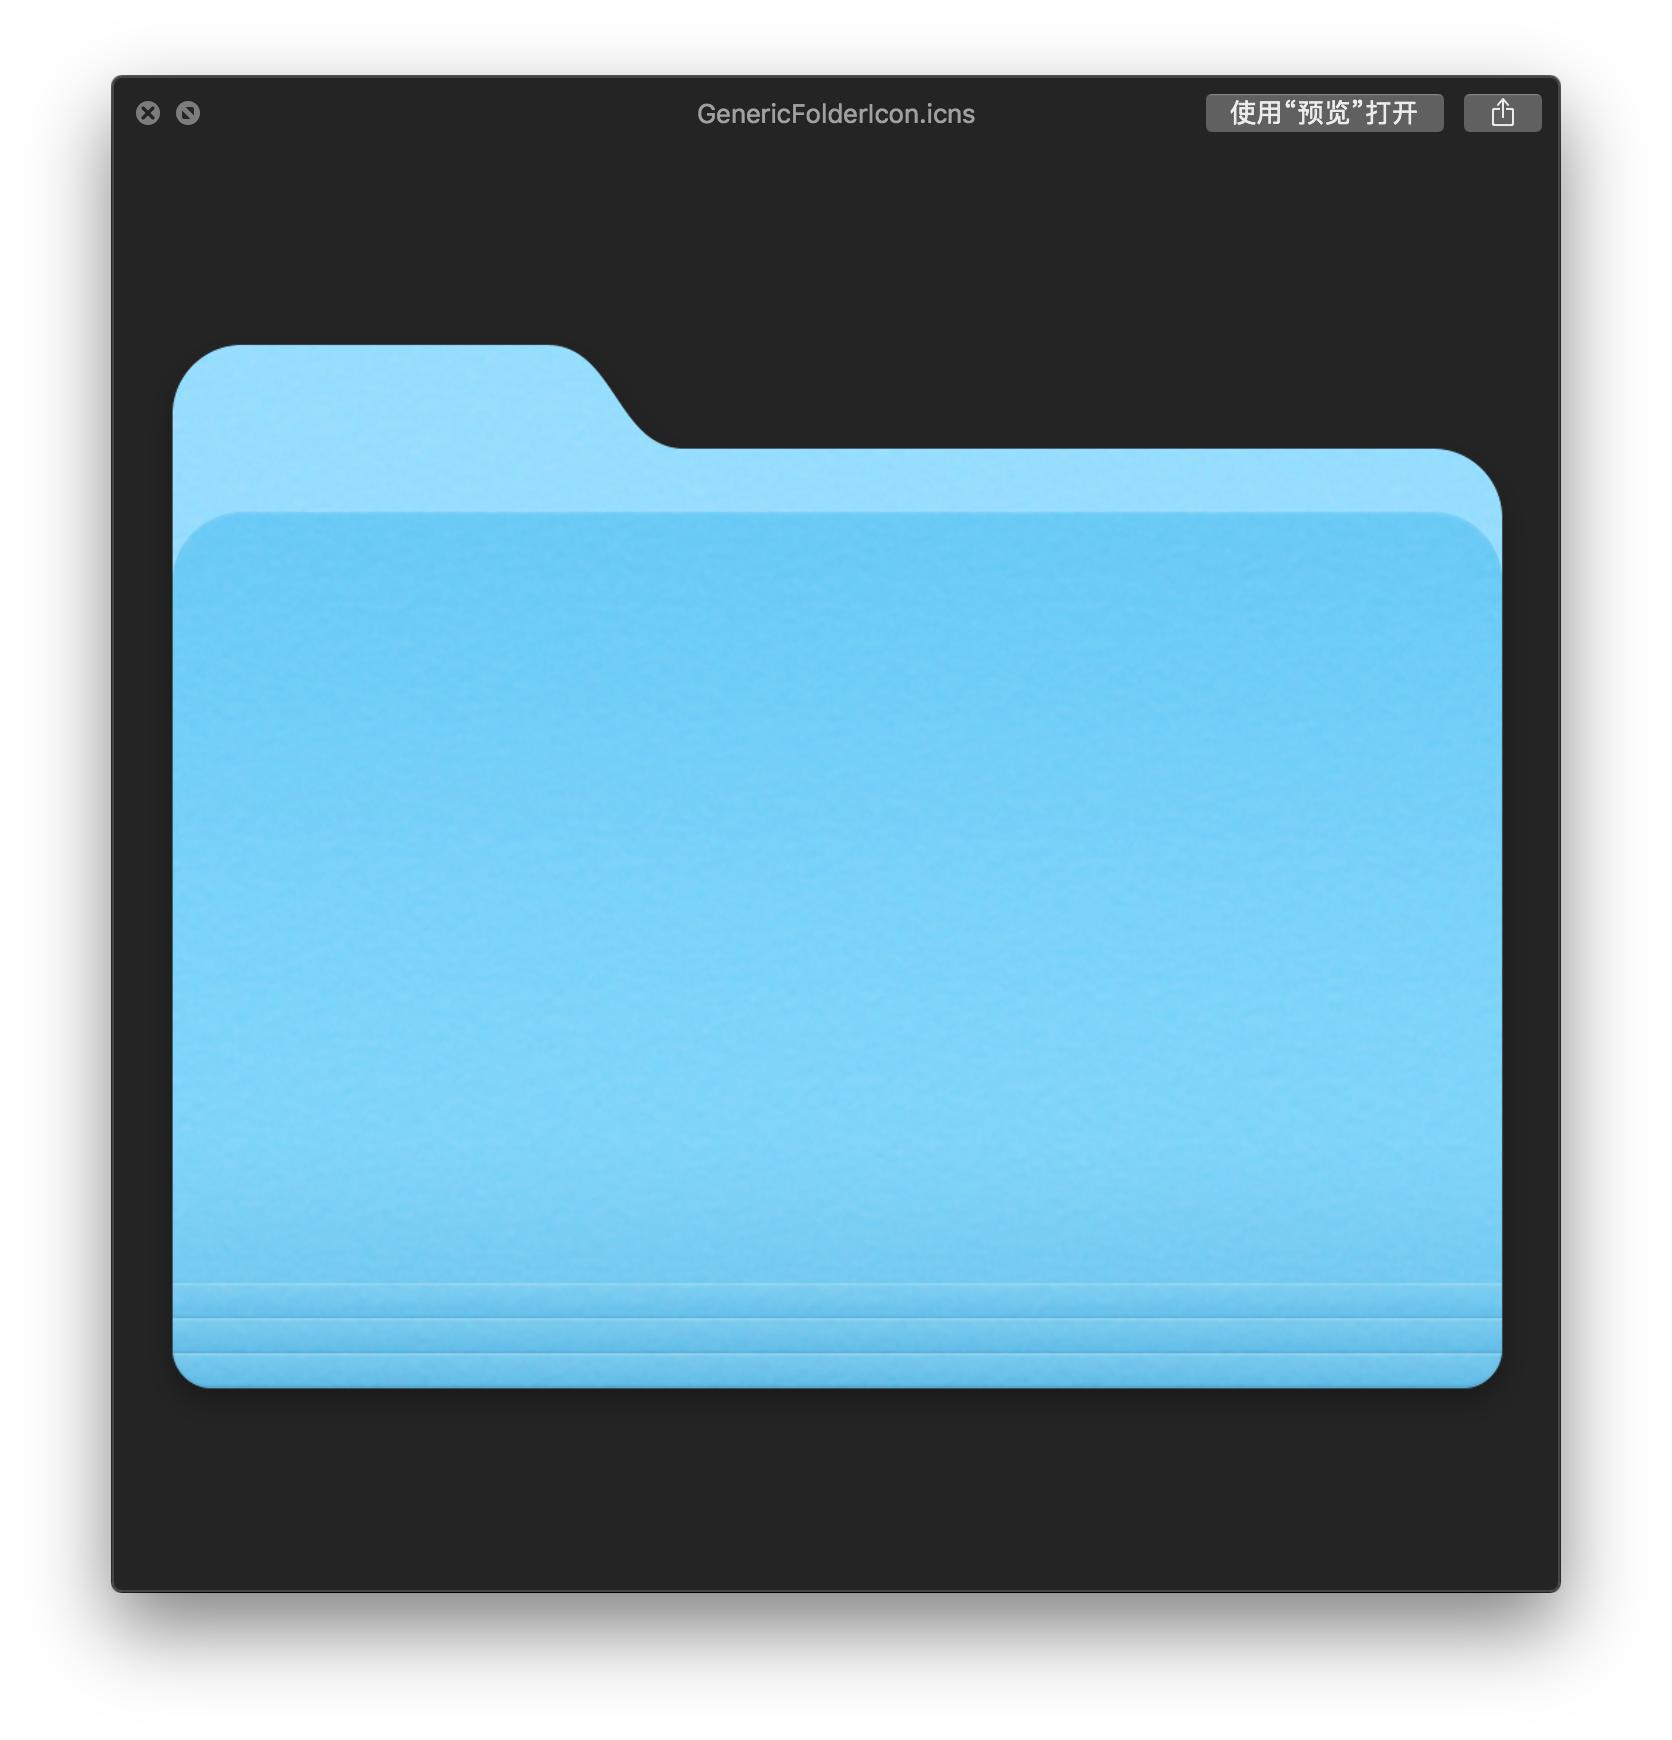 Macbook folder icons download mac os 10.14